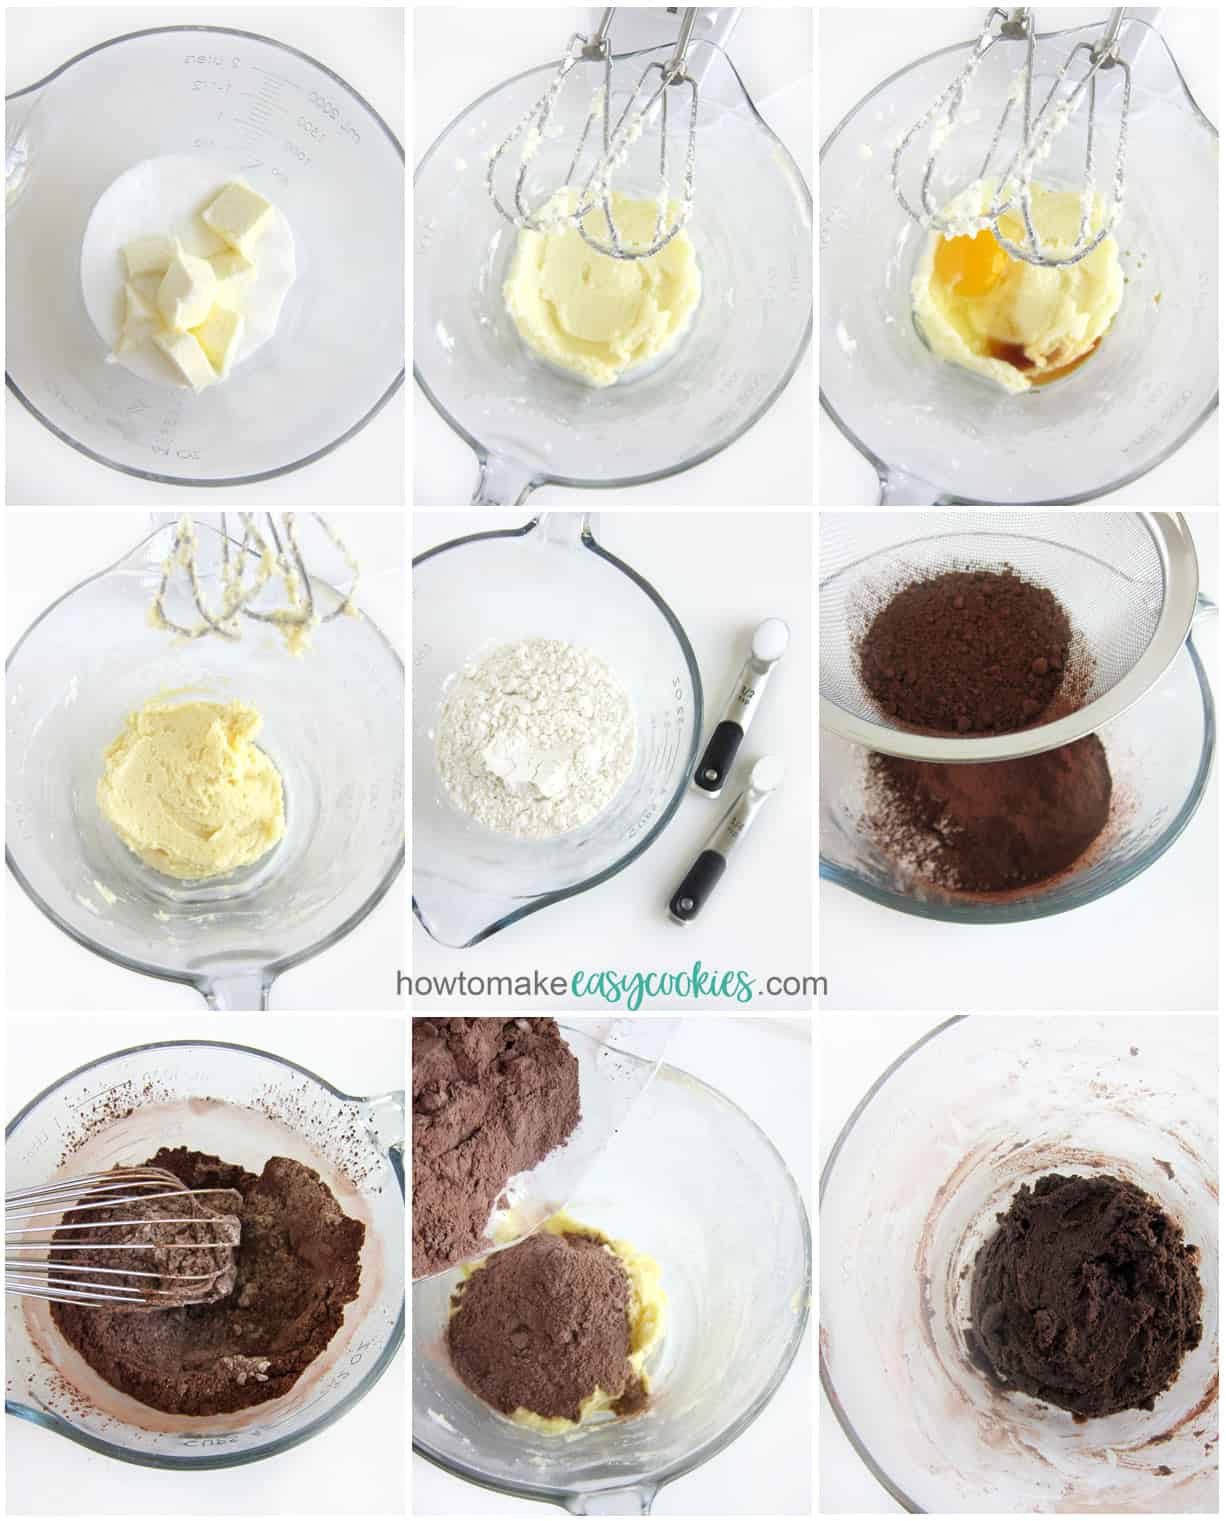 Mix butter, sugar, eggs, vanilla, flour, salt, baking powder, and cocoa powder to make chocolate cookie dough. 